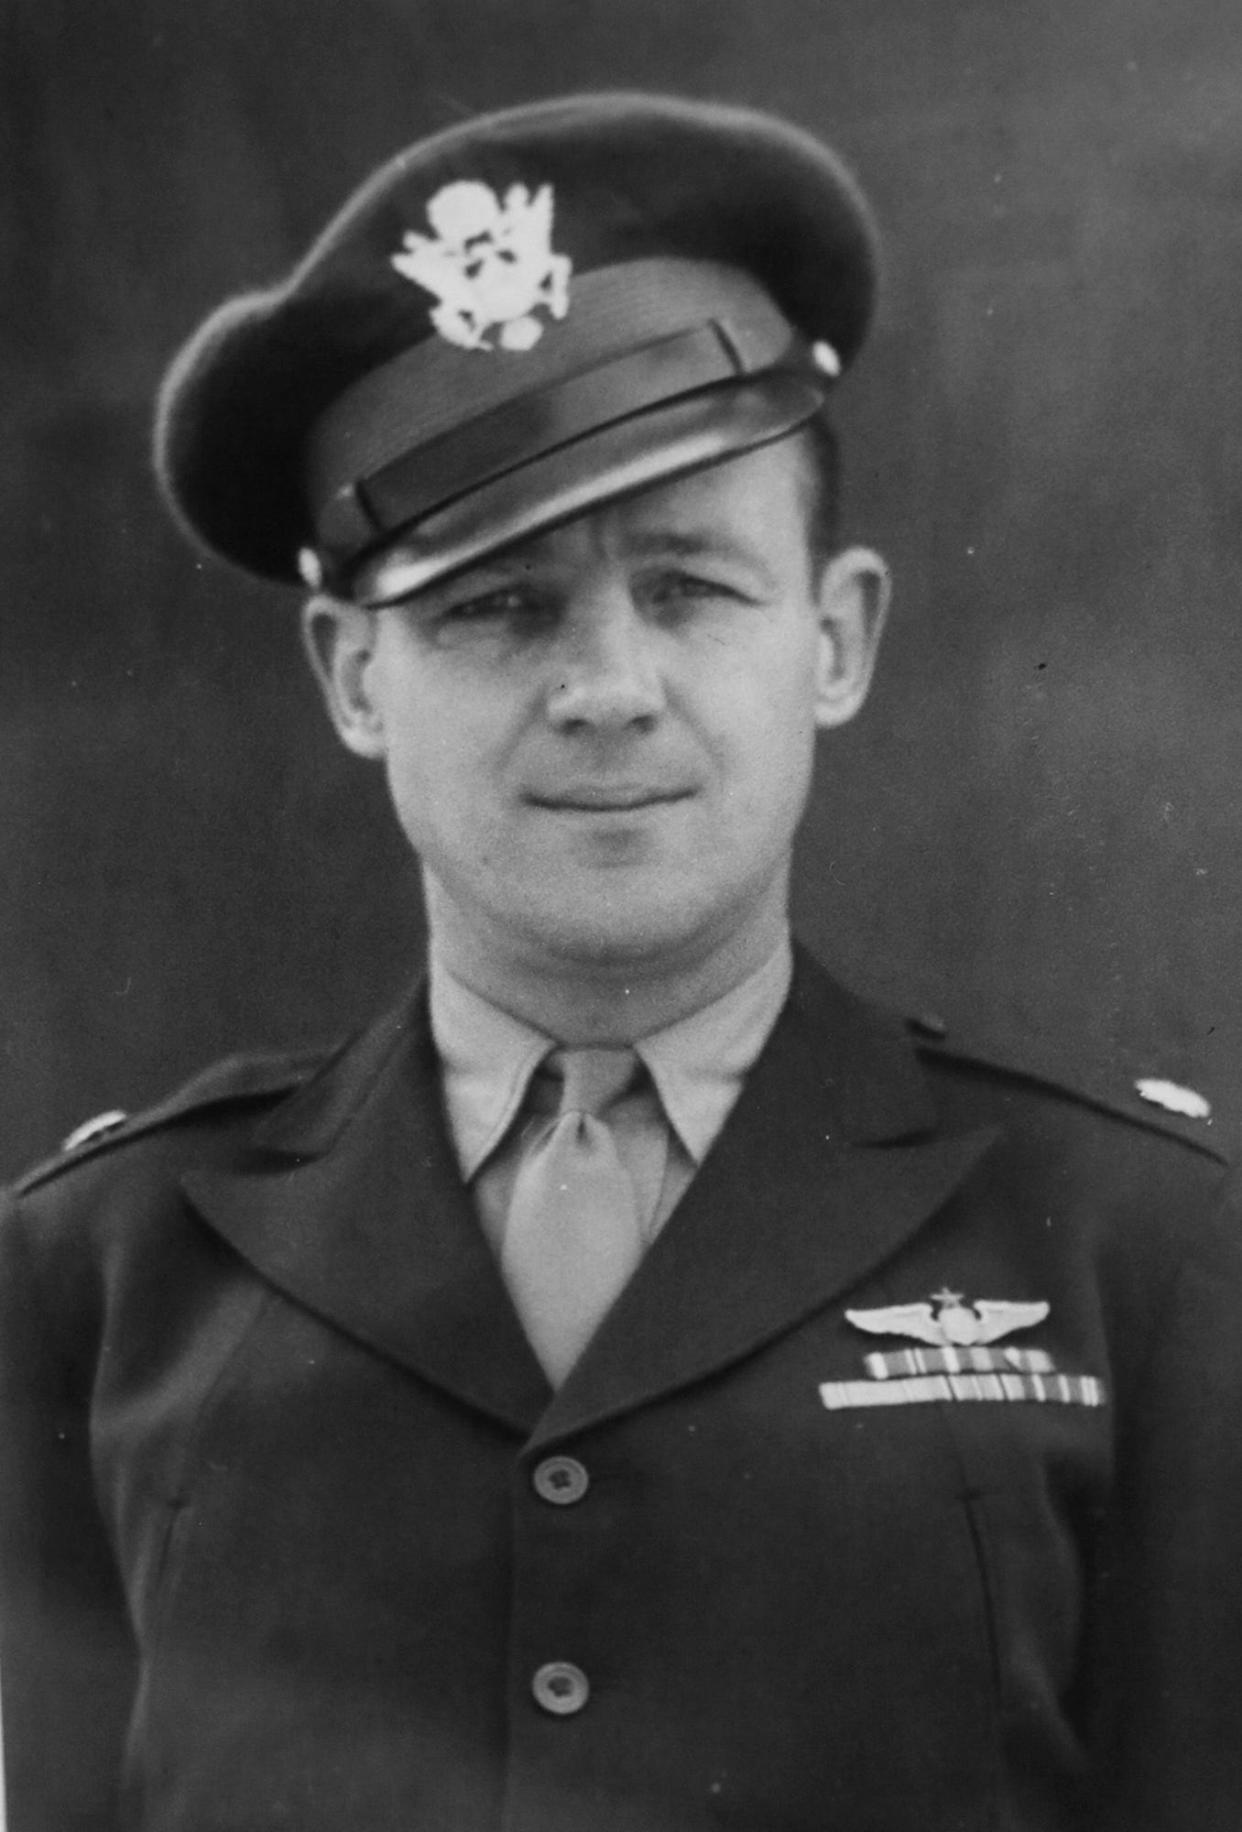 Lt. Col. Addison Baker was shot down in 1943 during World War II.